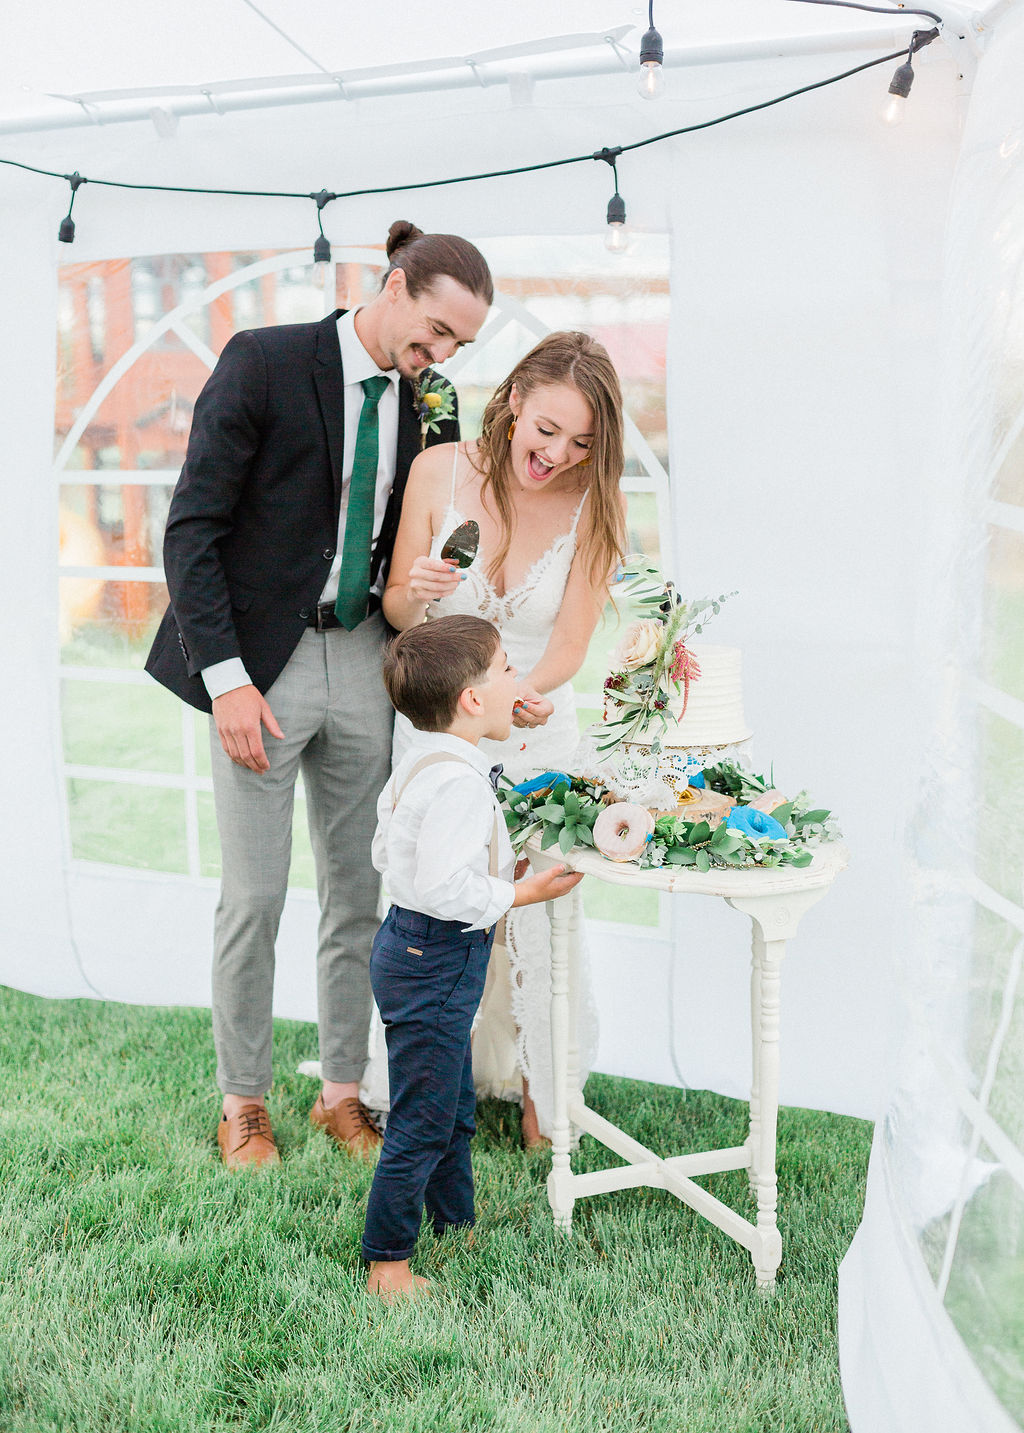 Intimate wild flower wedding - tent wedding, outdoor wedding, cake cutting